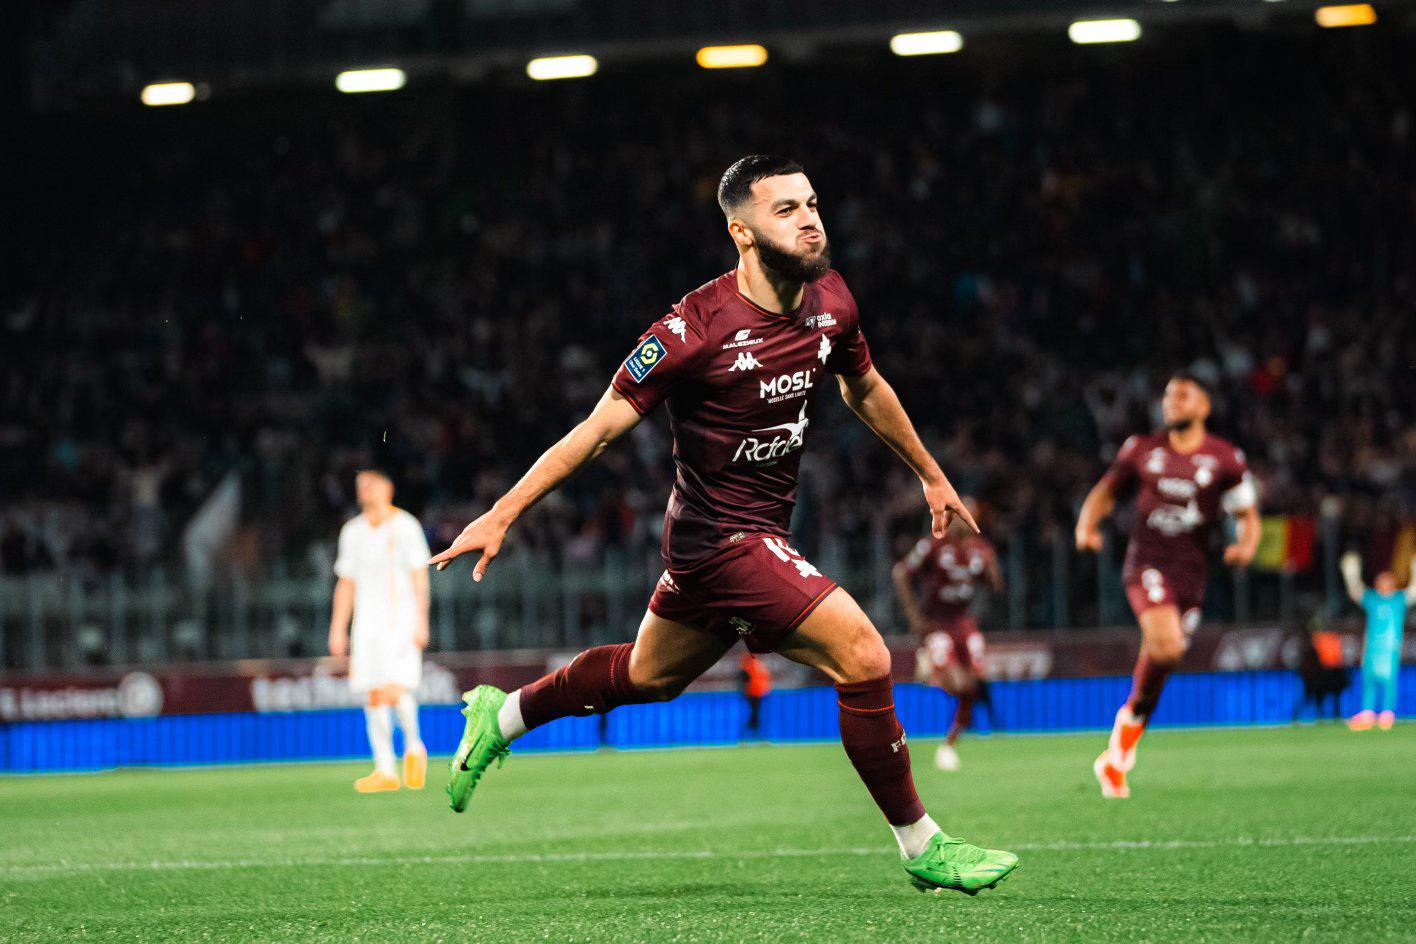 VIDEO | Ligue 1 Highlights: Metz vs Lens